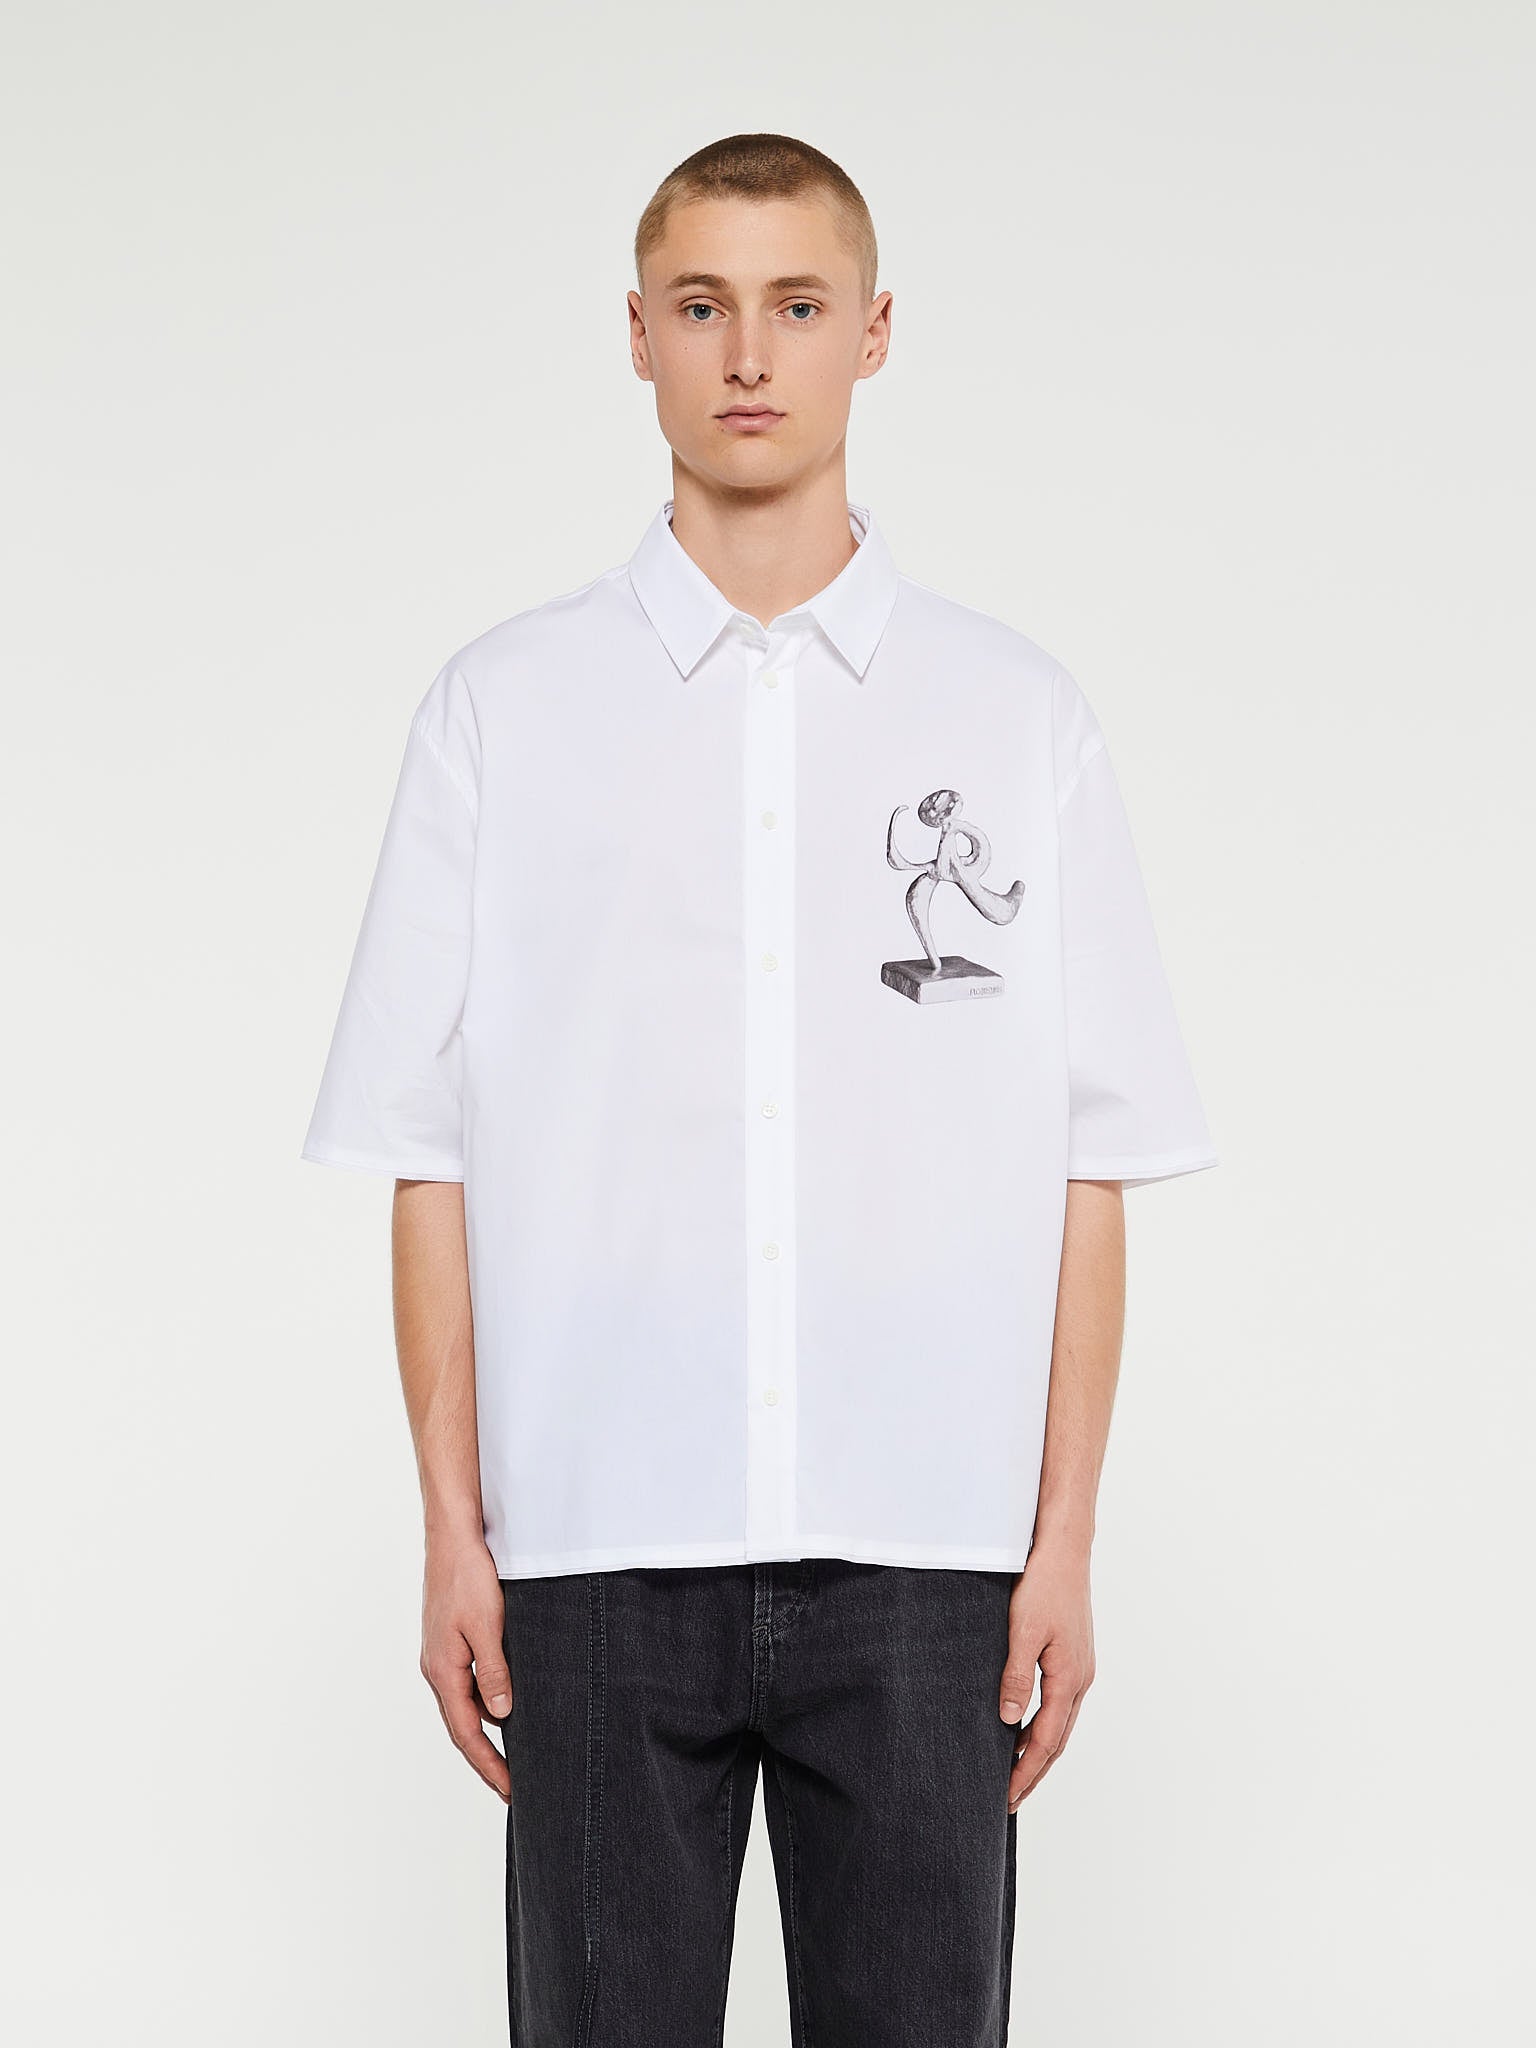 Jacquemus - La Chemise Cabri Shirt in Black and White Organic Statu